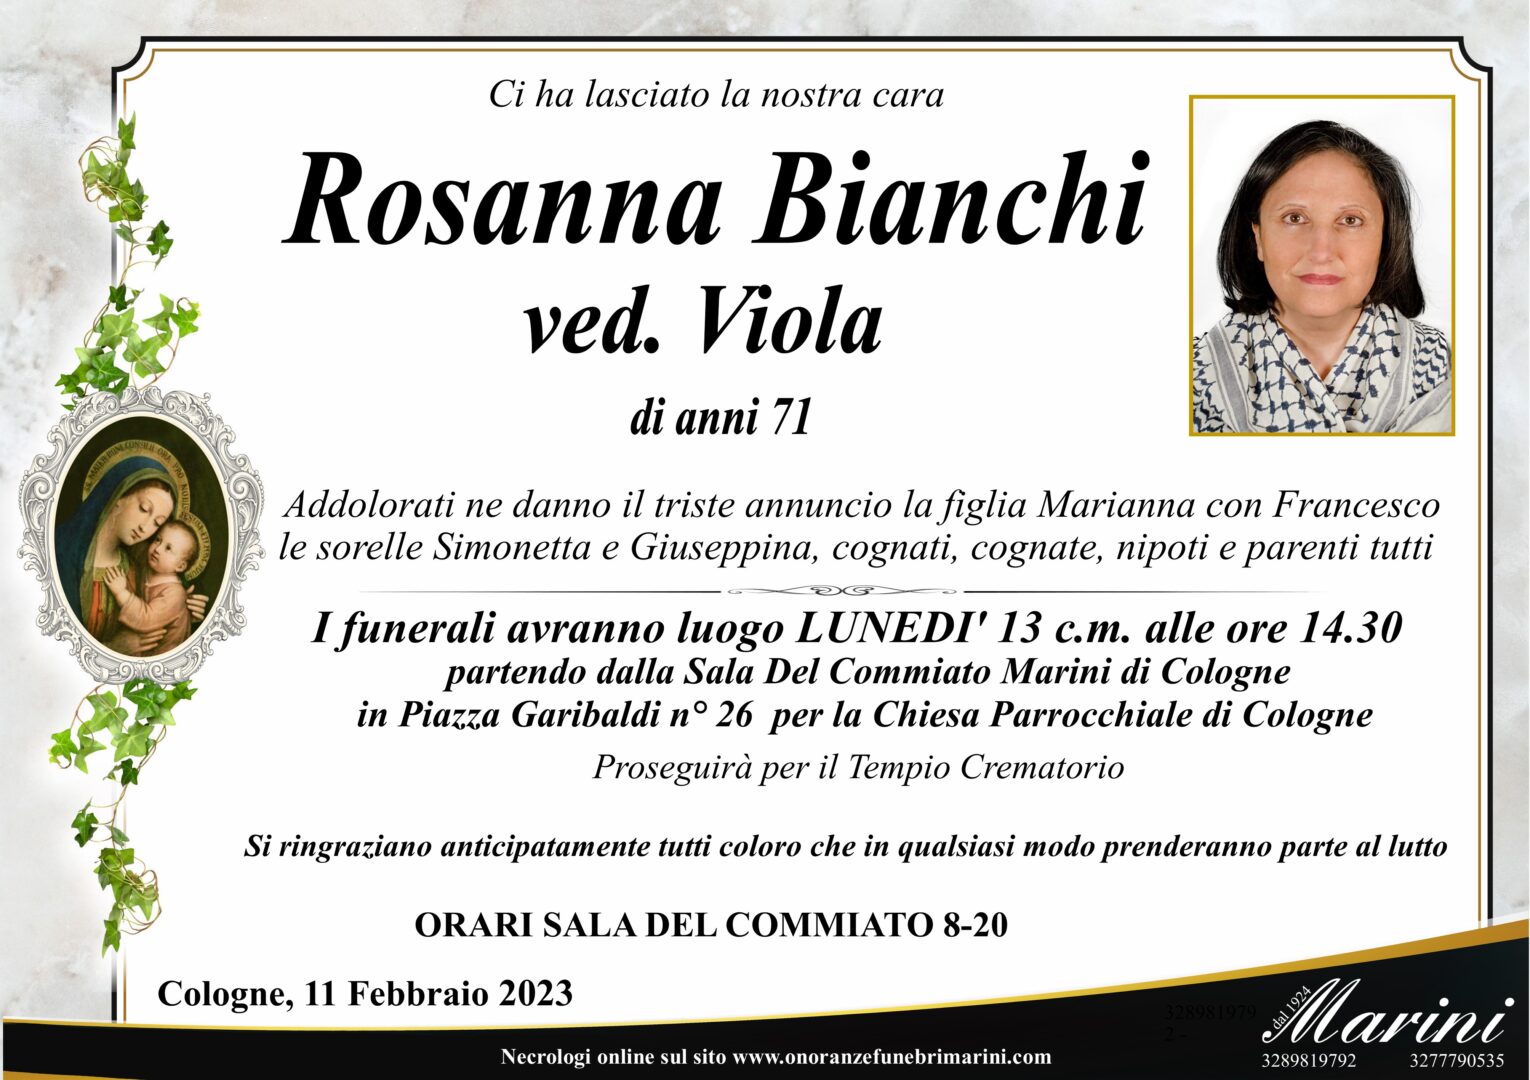 Rosanna Bianchi ved. Viola